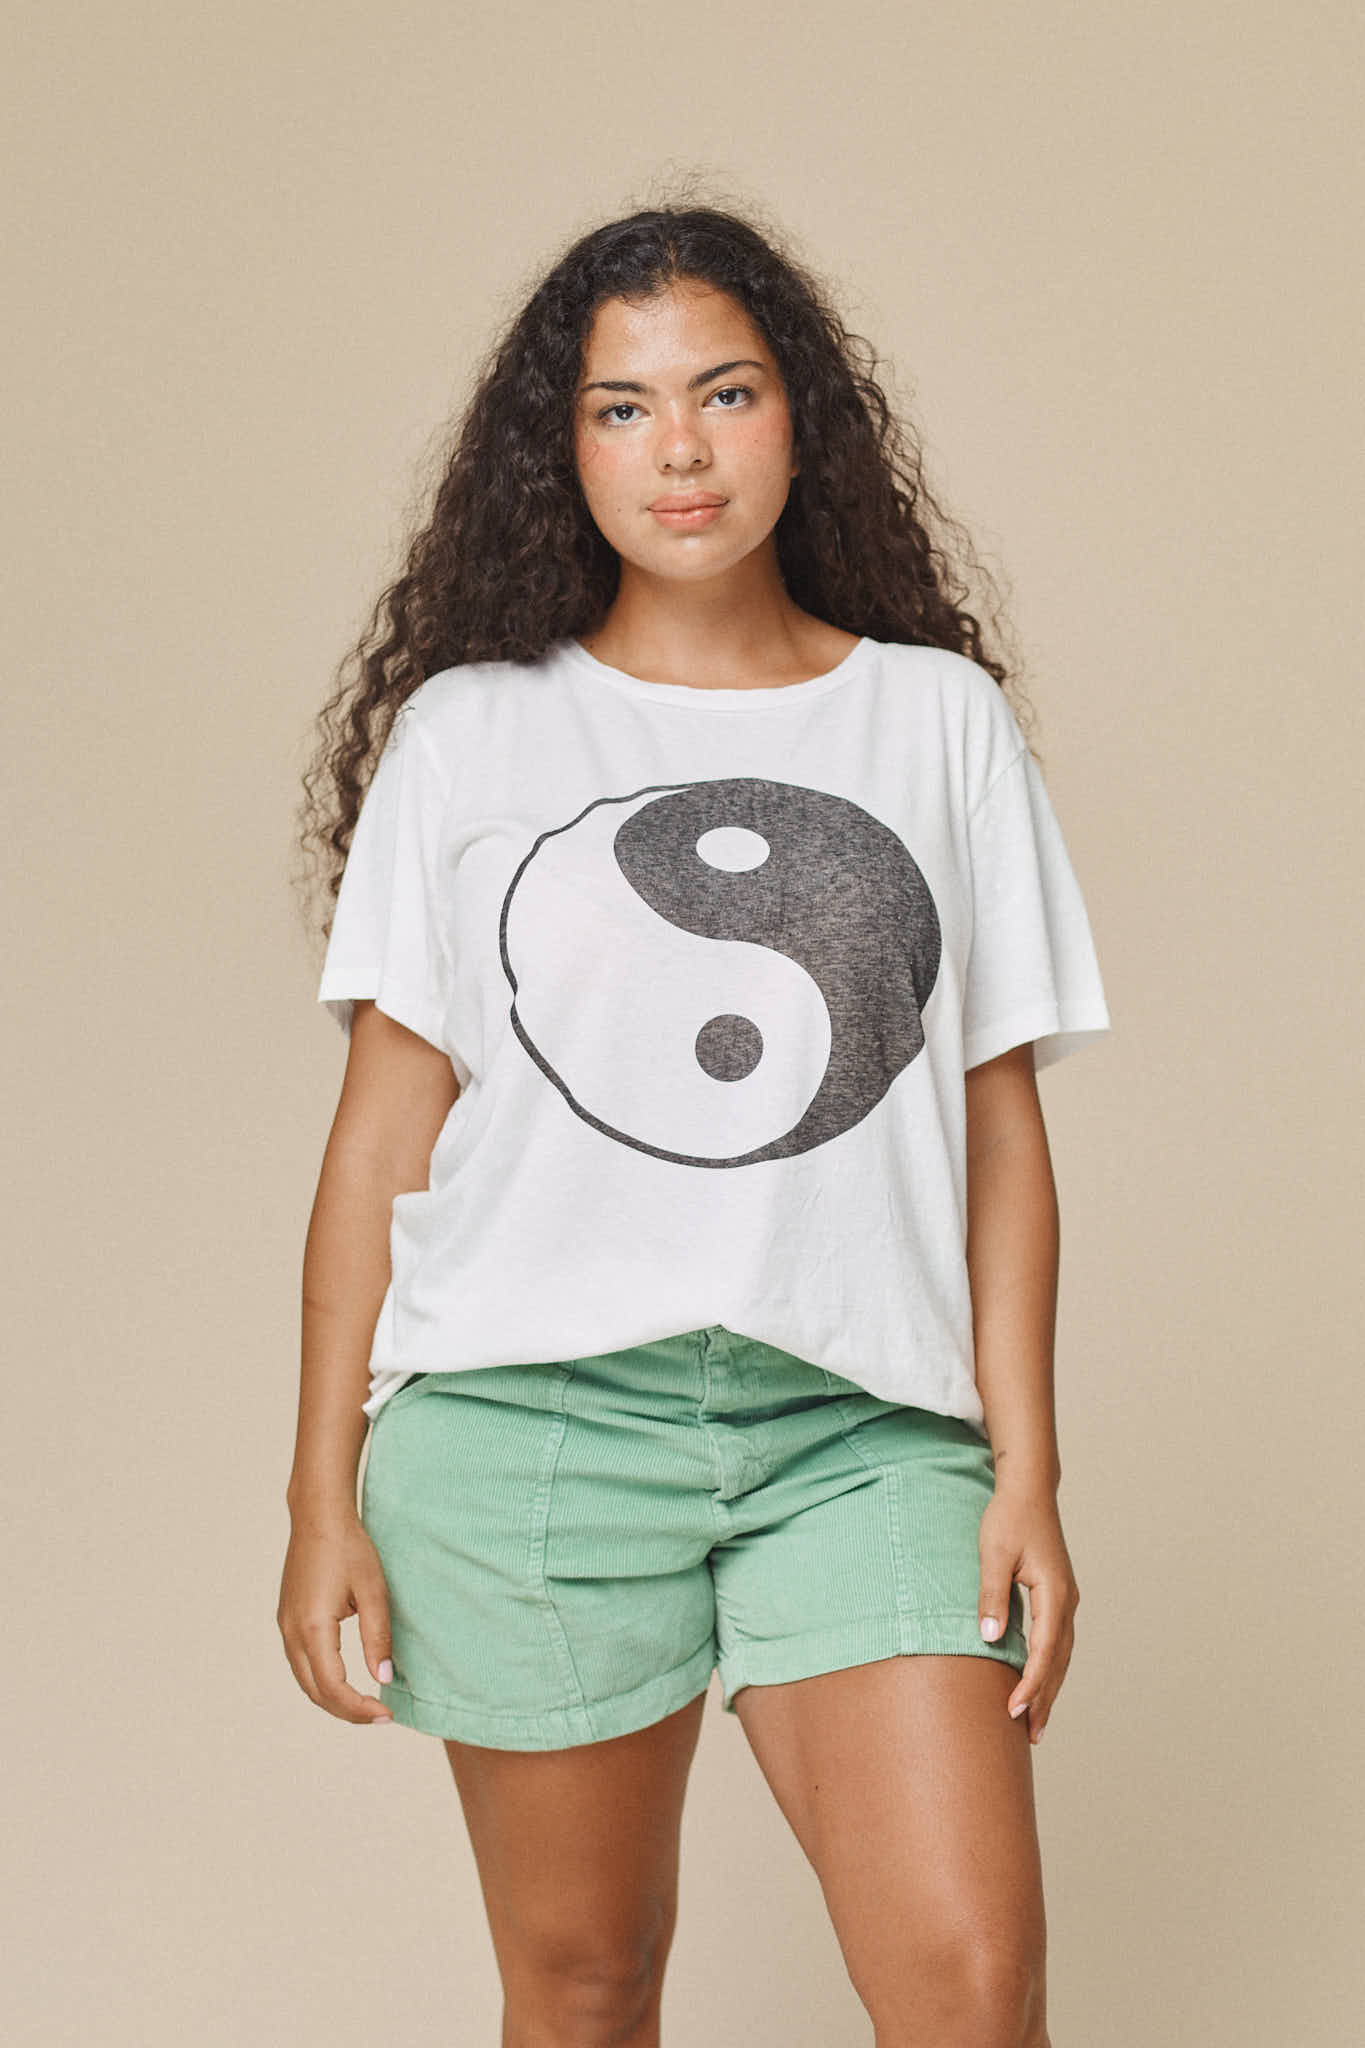 Yin Yang Ojai Tee | Jungmaven Hemp Clothing & Accessories / model_desc: Nikki is 5’2” wearing L